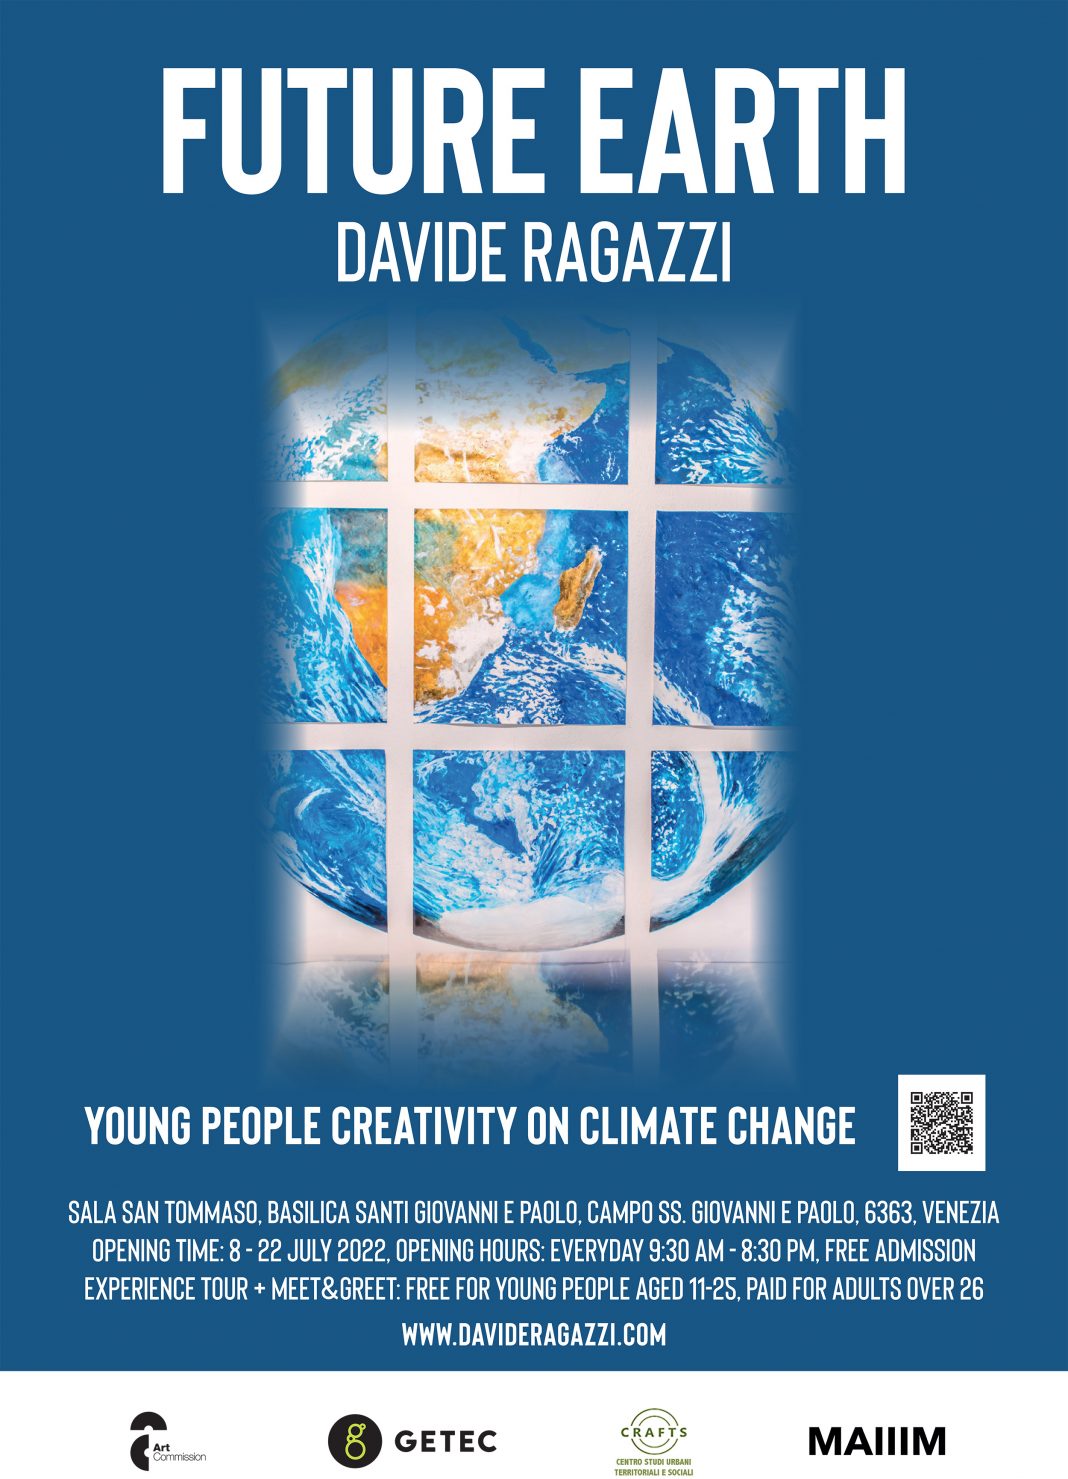 Davide Ragazzi – Future Earthhttps://www.exibart.com/repository/media/formidable/11/img/f4e/Future-Earth-Davide-Ragazzi-Manifesto-1068x1479.jpg